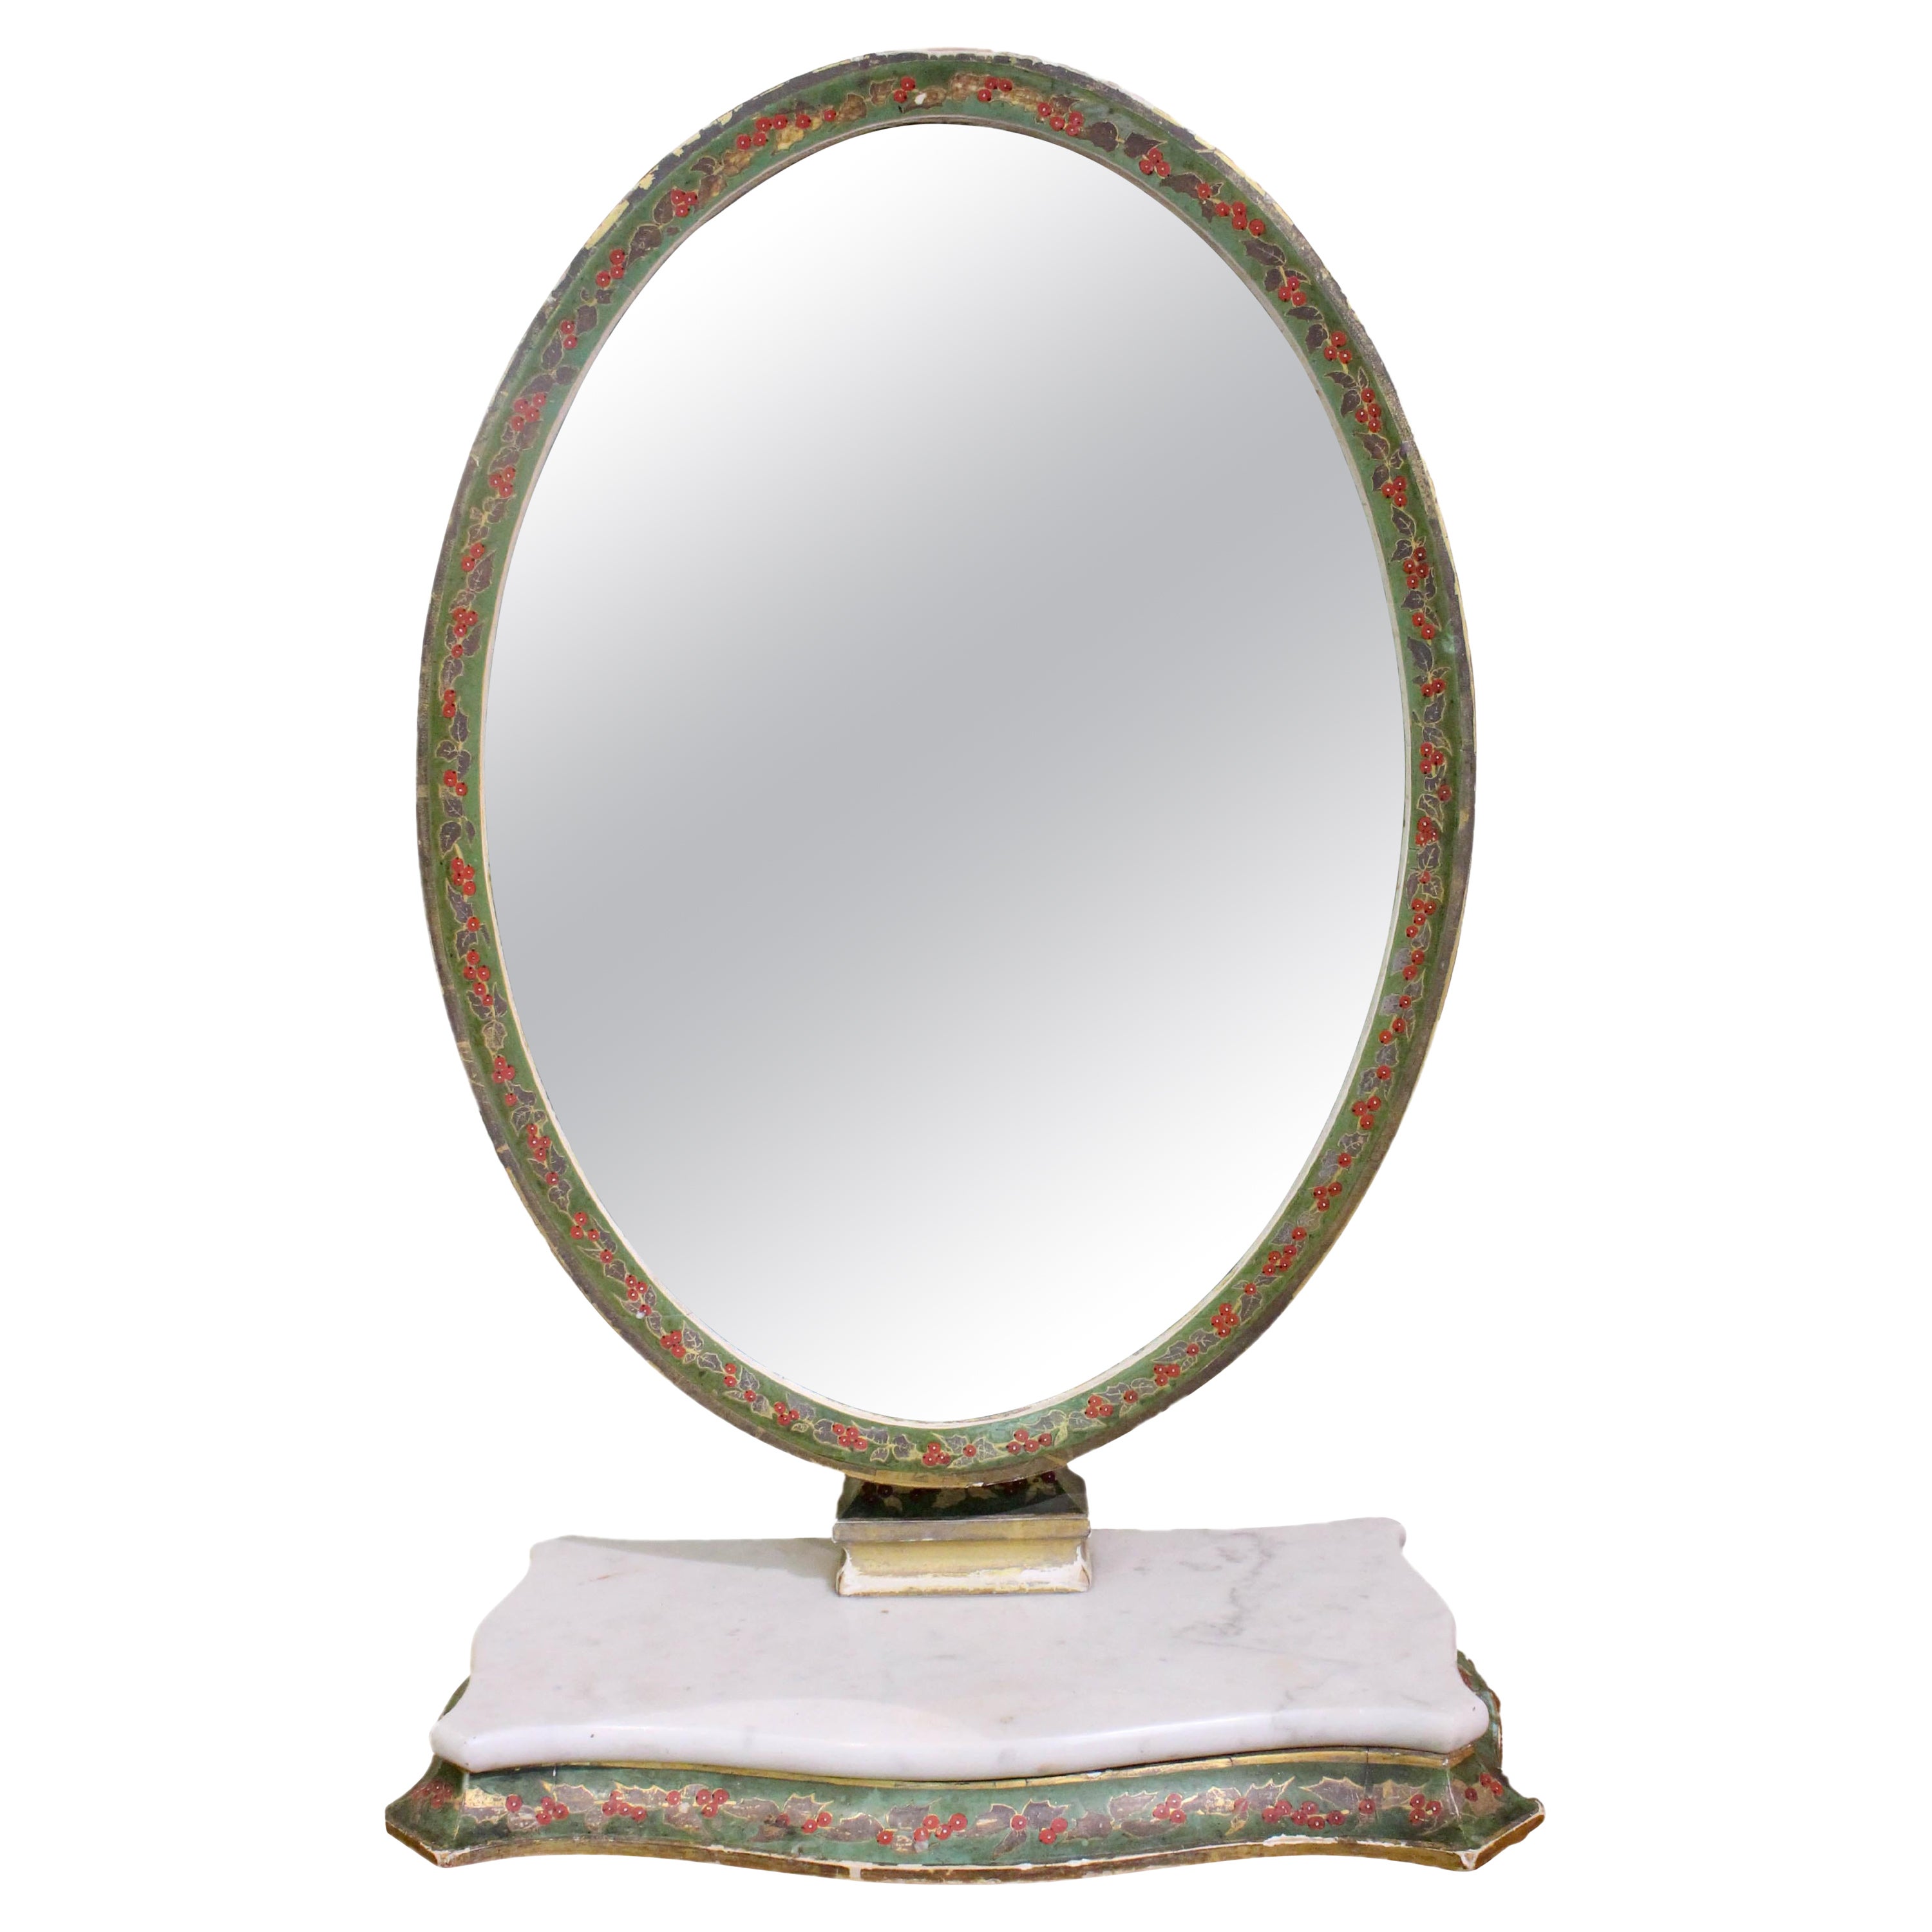 Ovaler venezianischer Spiegel, um 1860 